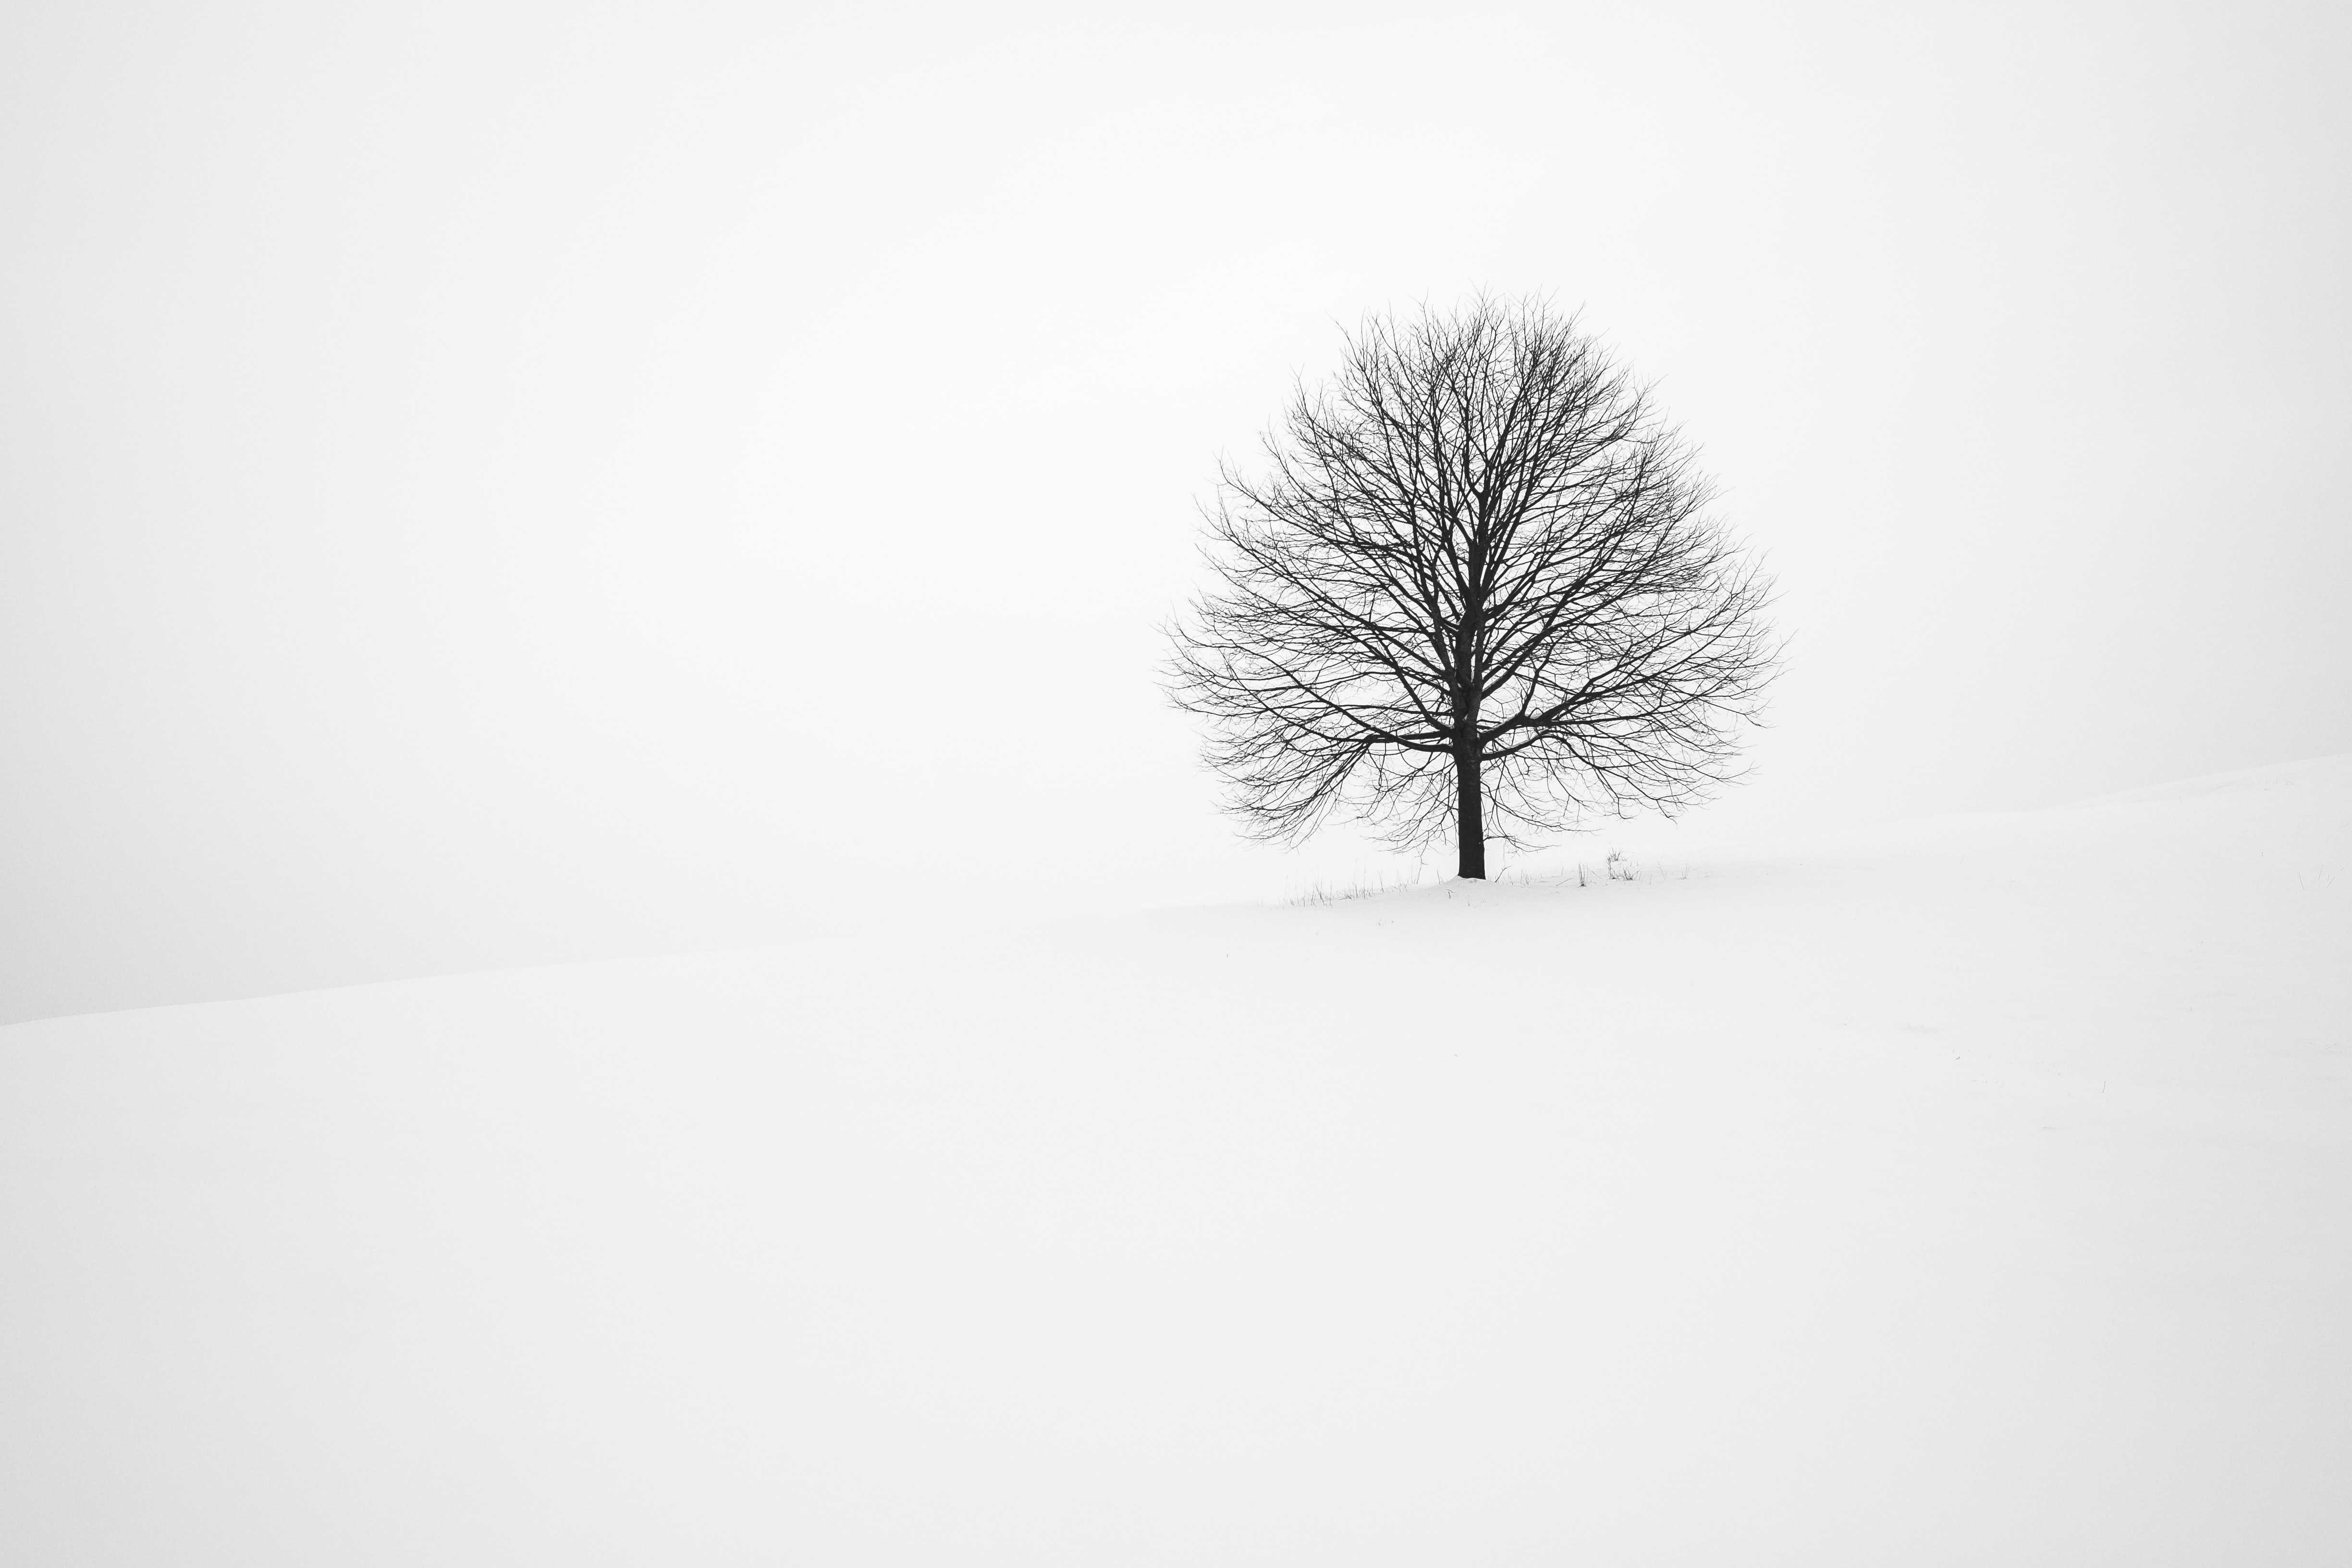 Photo of a lone, barren tree on a snowy landscape